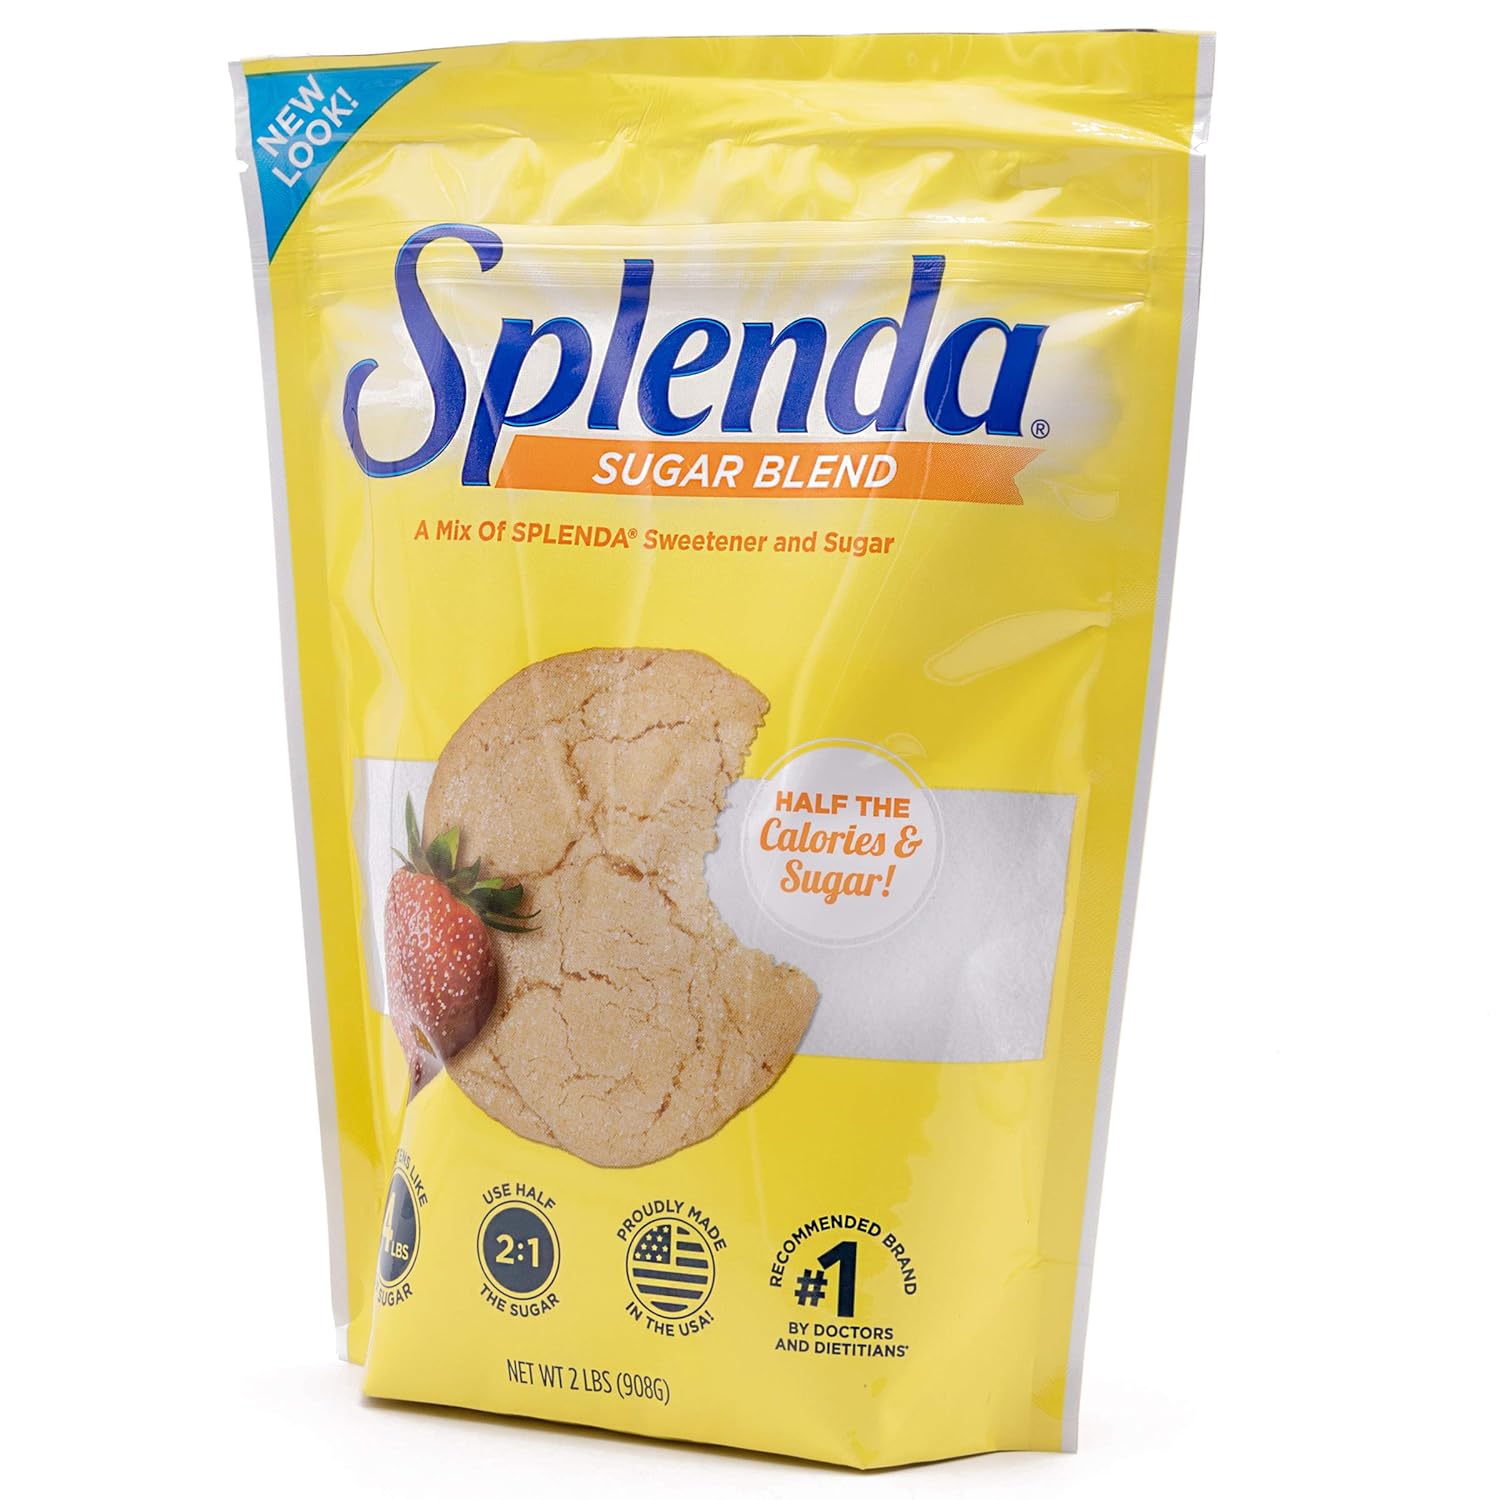 Splenda Sugar Blend, 32-Ounce Bags (Pack of 2) : Sugar Subst